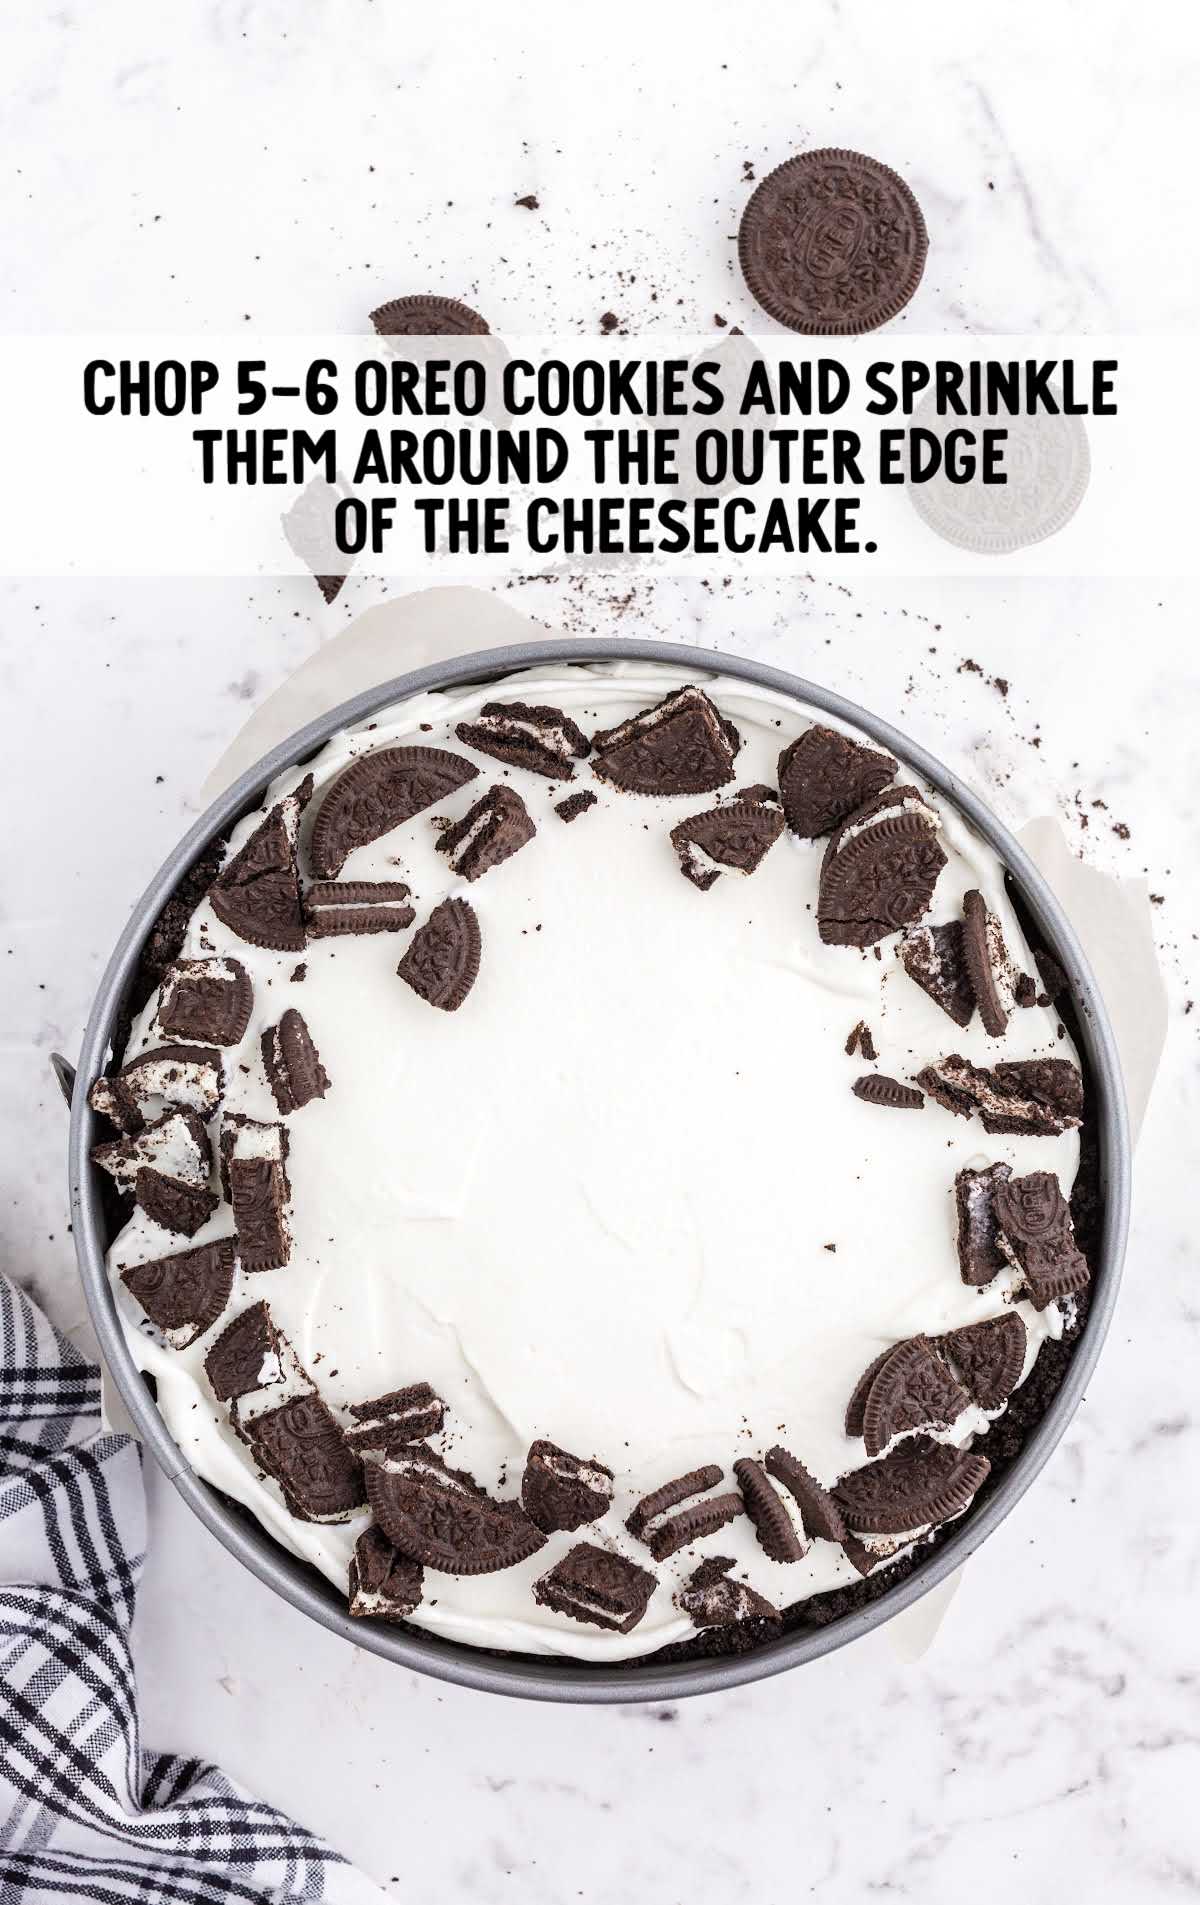 chopped up oreos sprinkled around the cheesecake